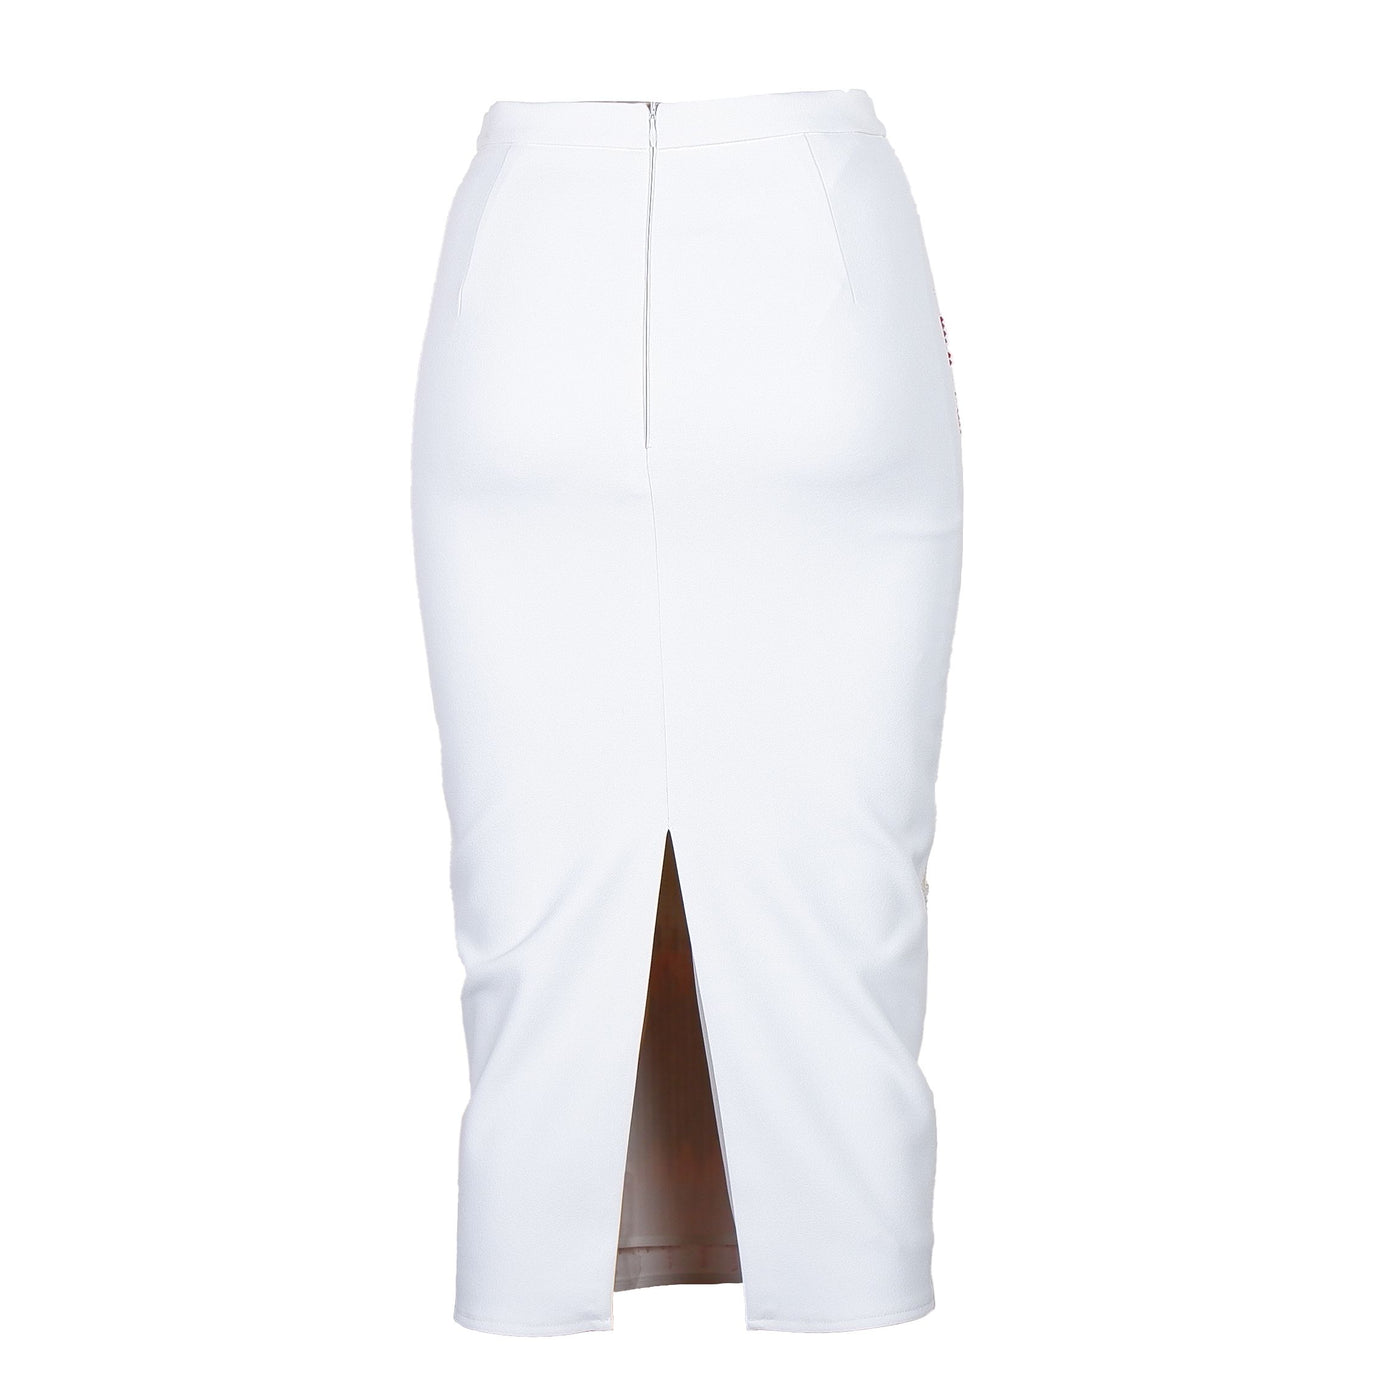 Elisabetta Franchi White Polyester Skirt